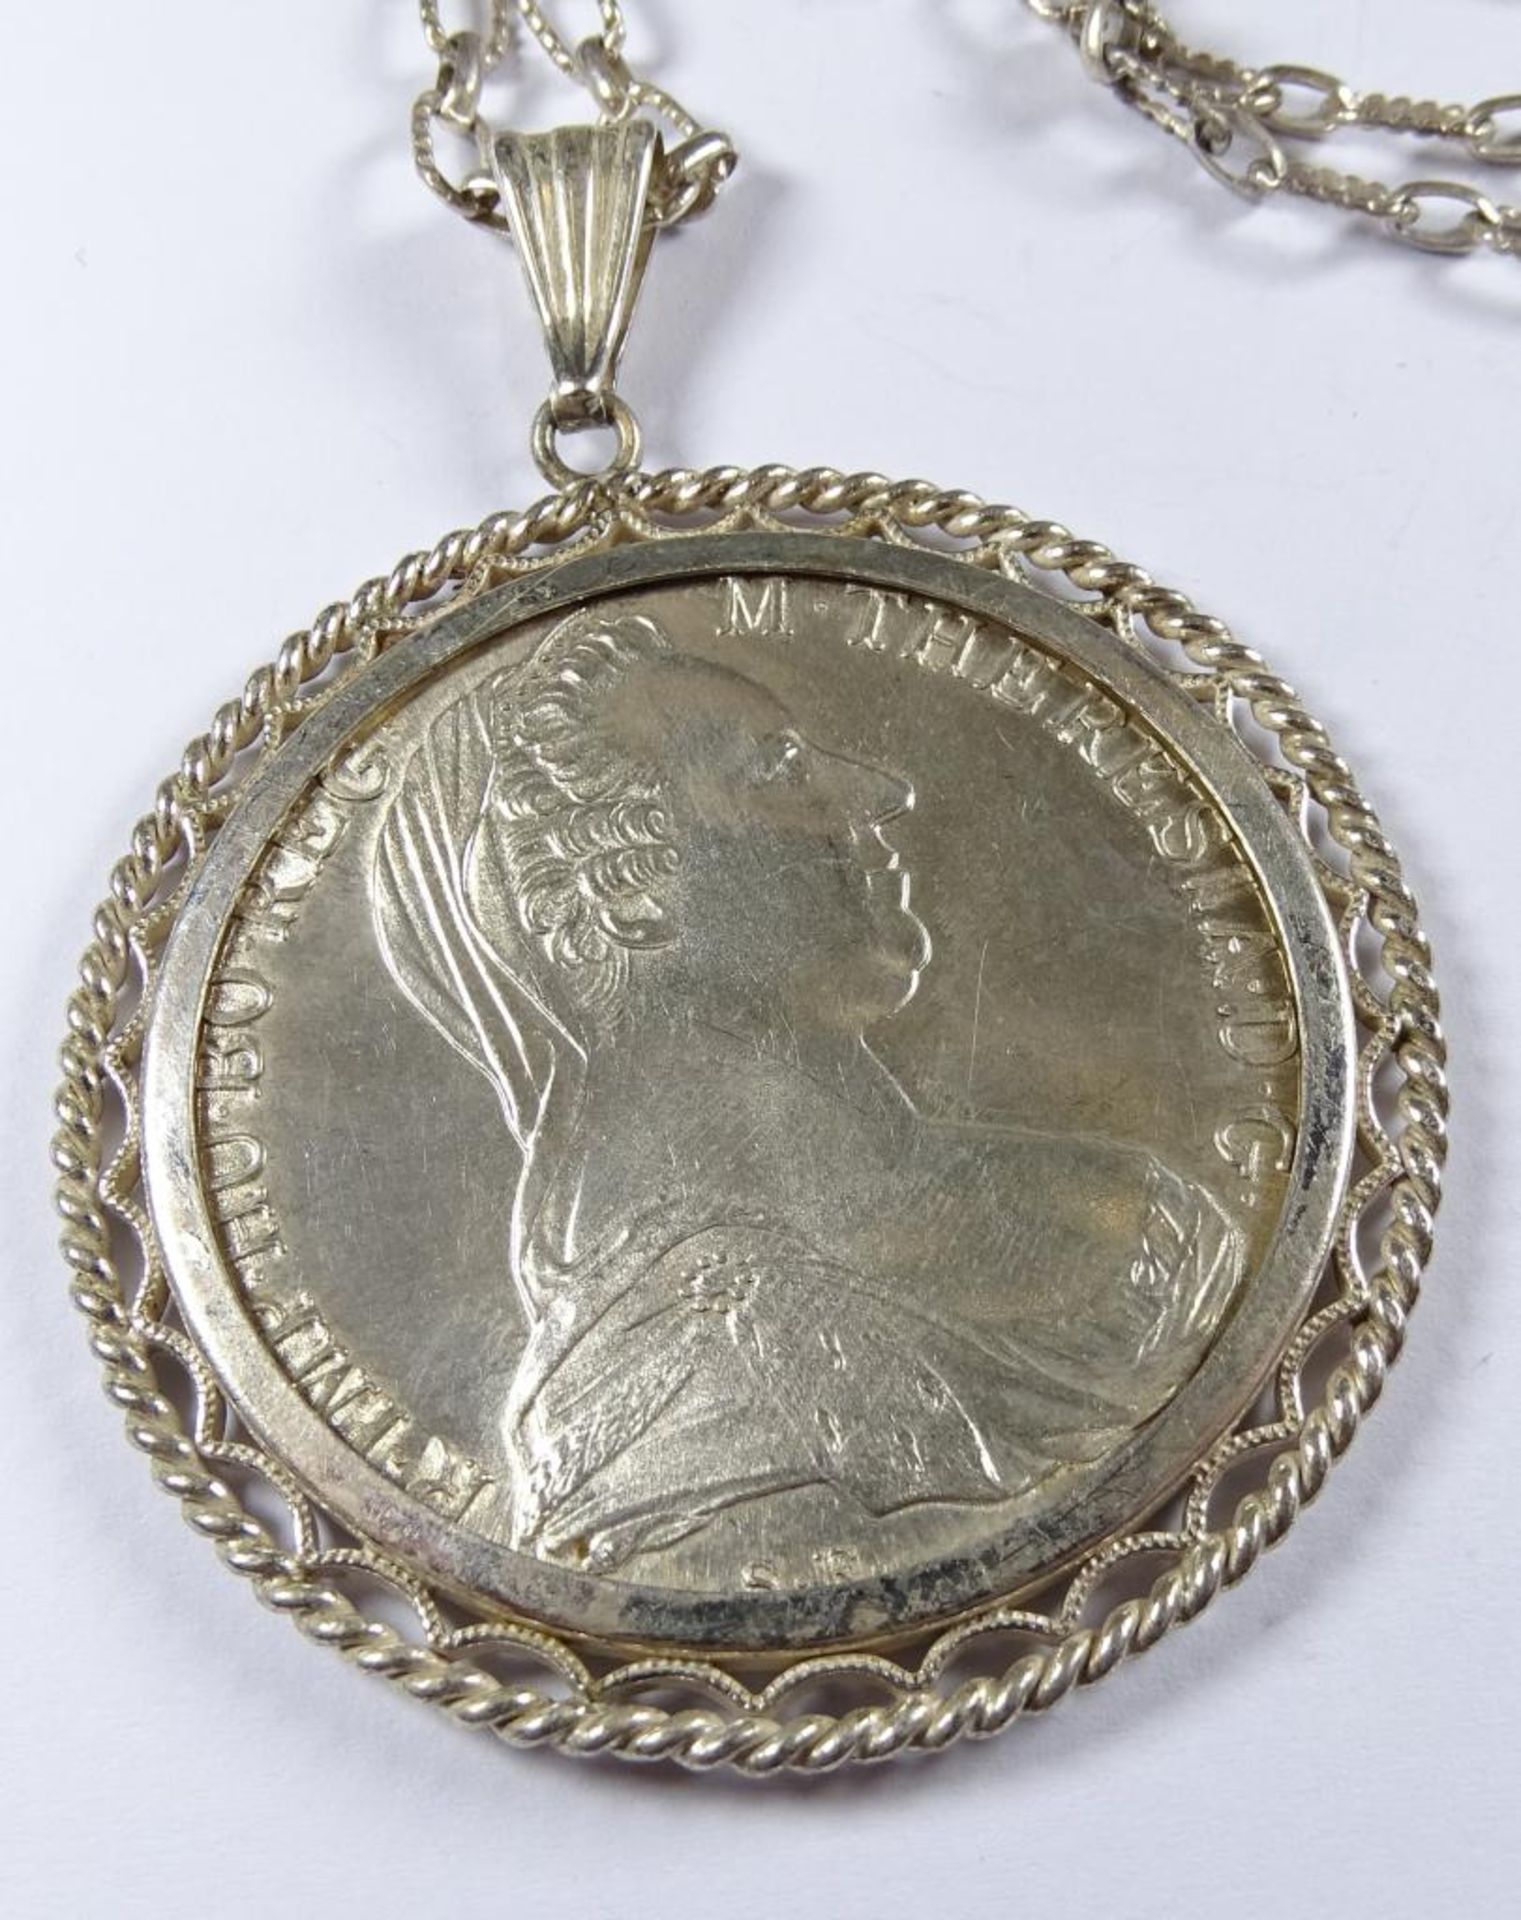 Maria Theresia Thaler in Silberfassung an Kette,Silber -835- zus.44,8gr., - Bild 2 aus 2